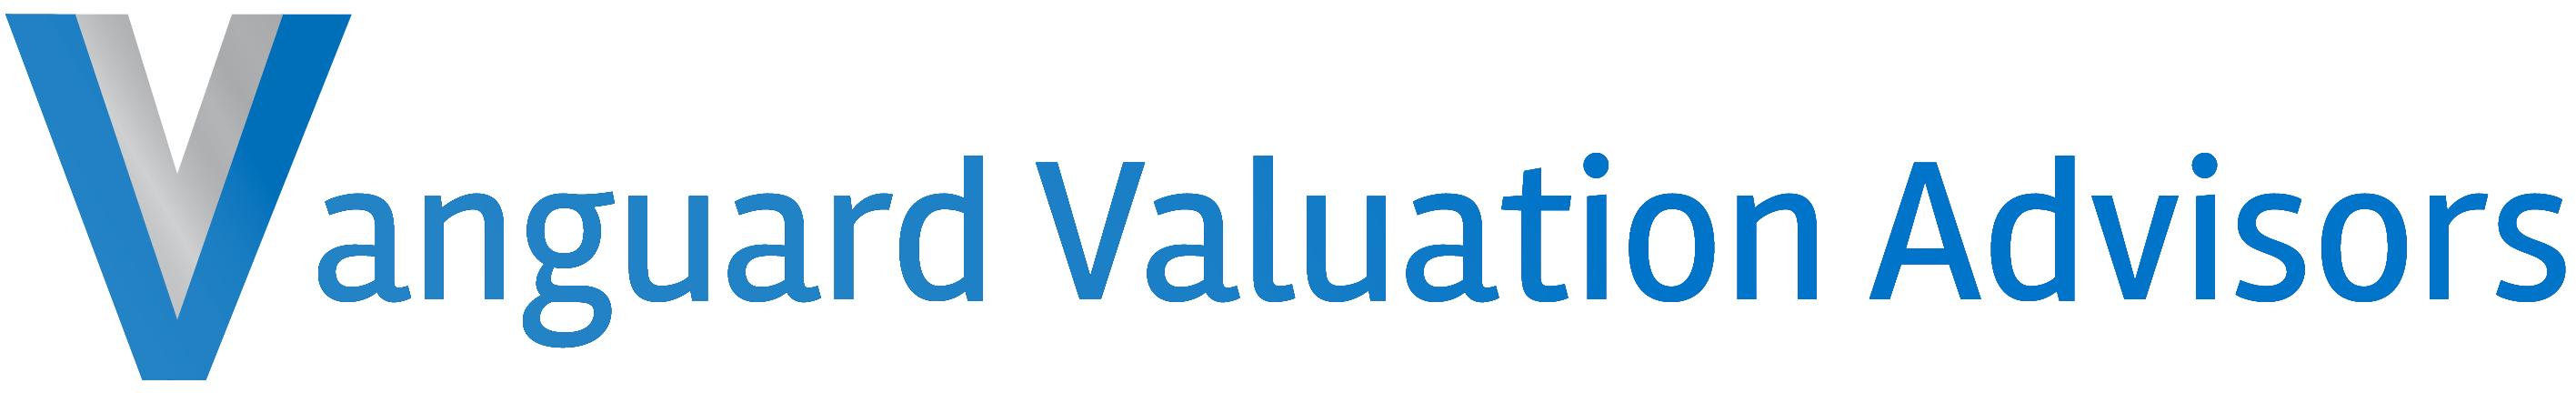 Vanguard Valuation